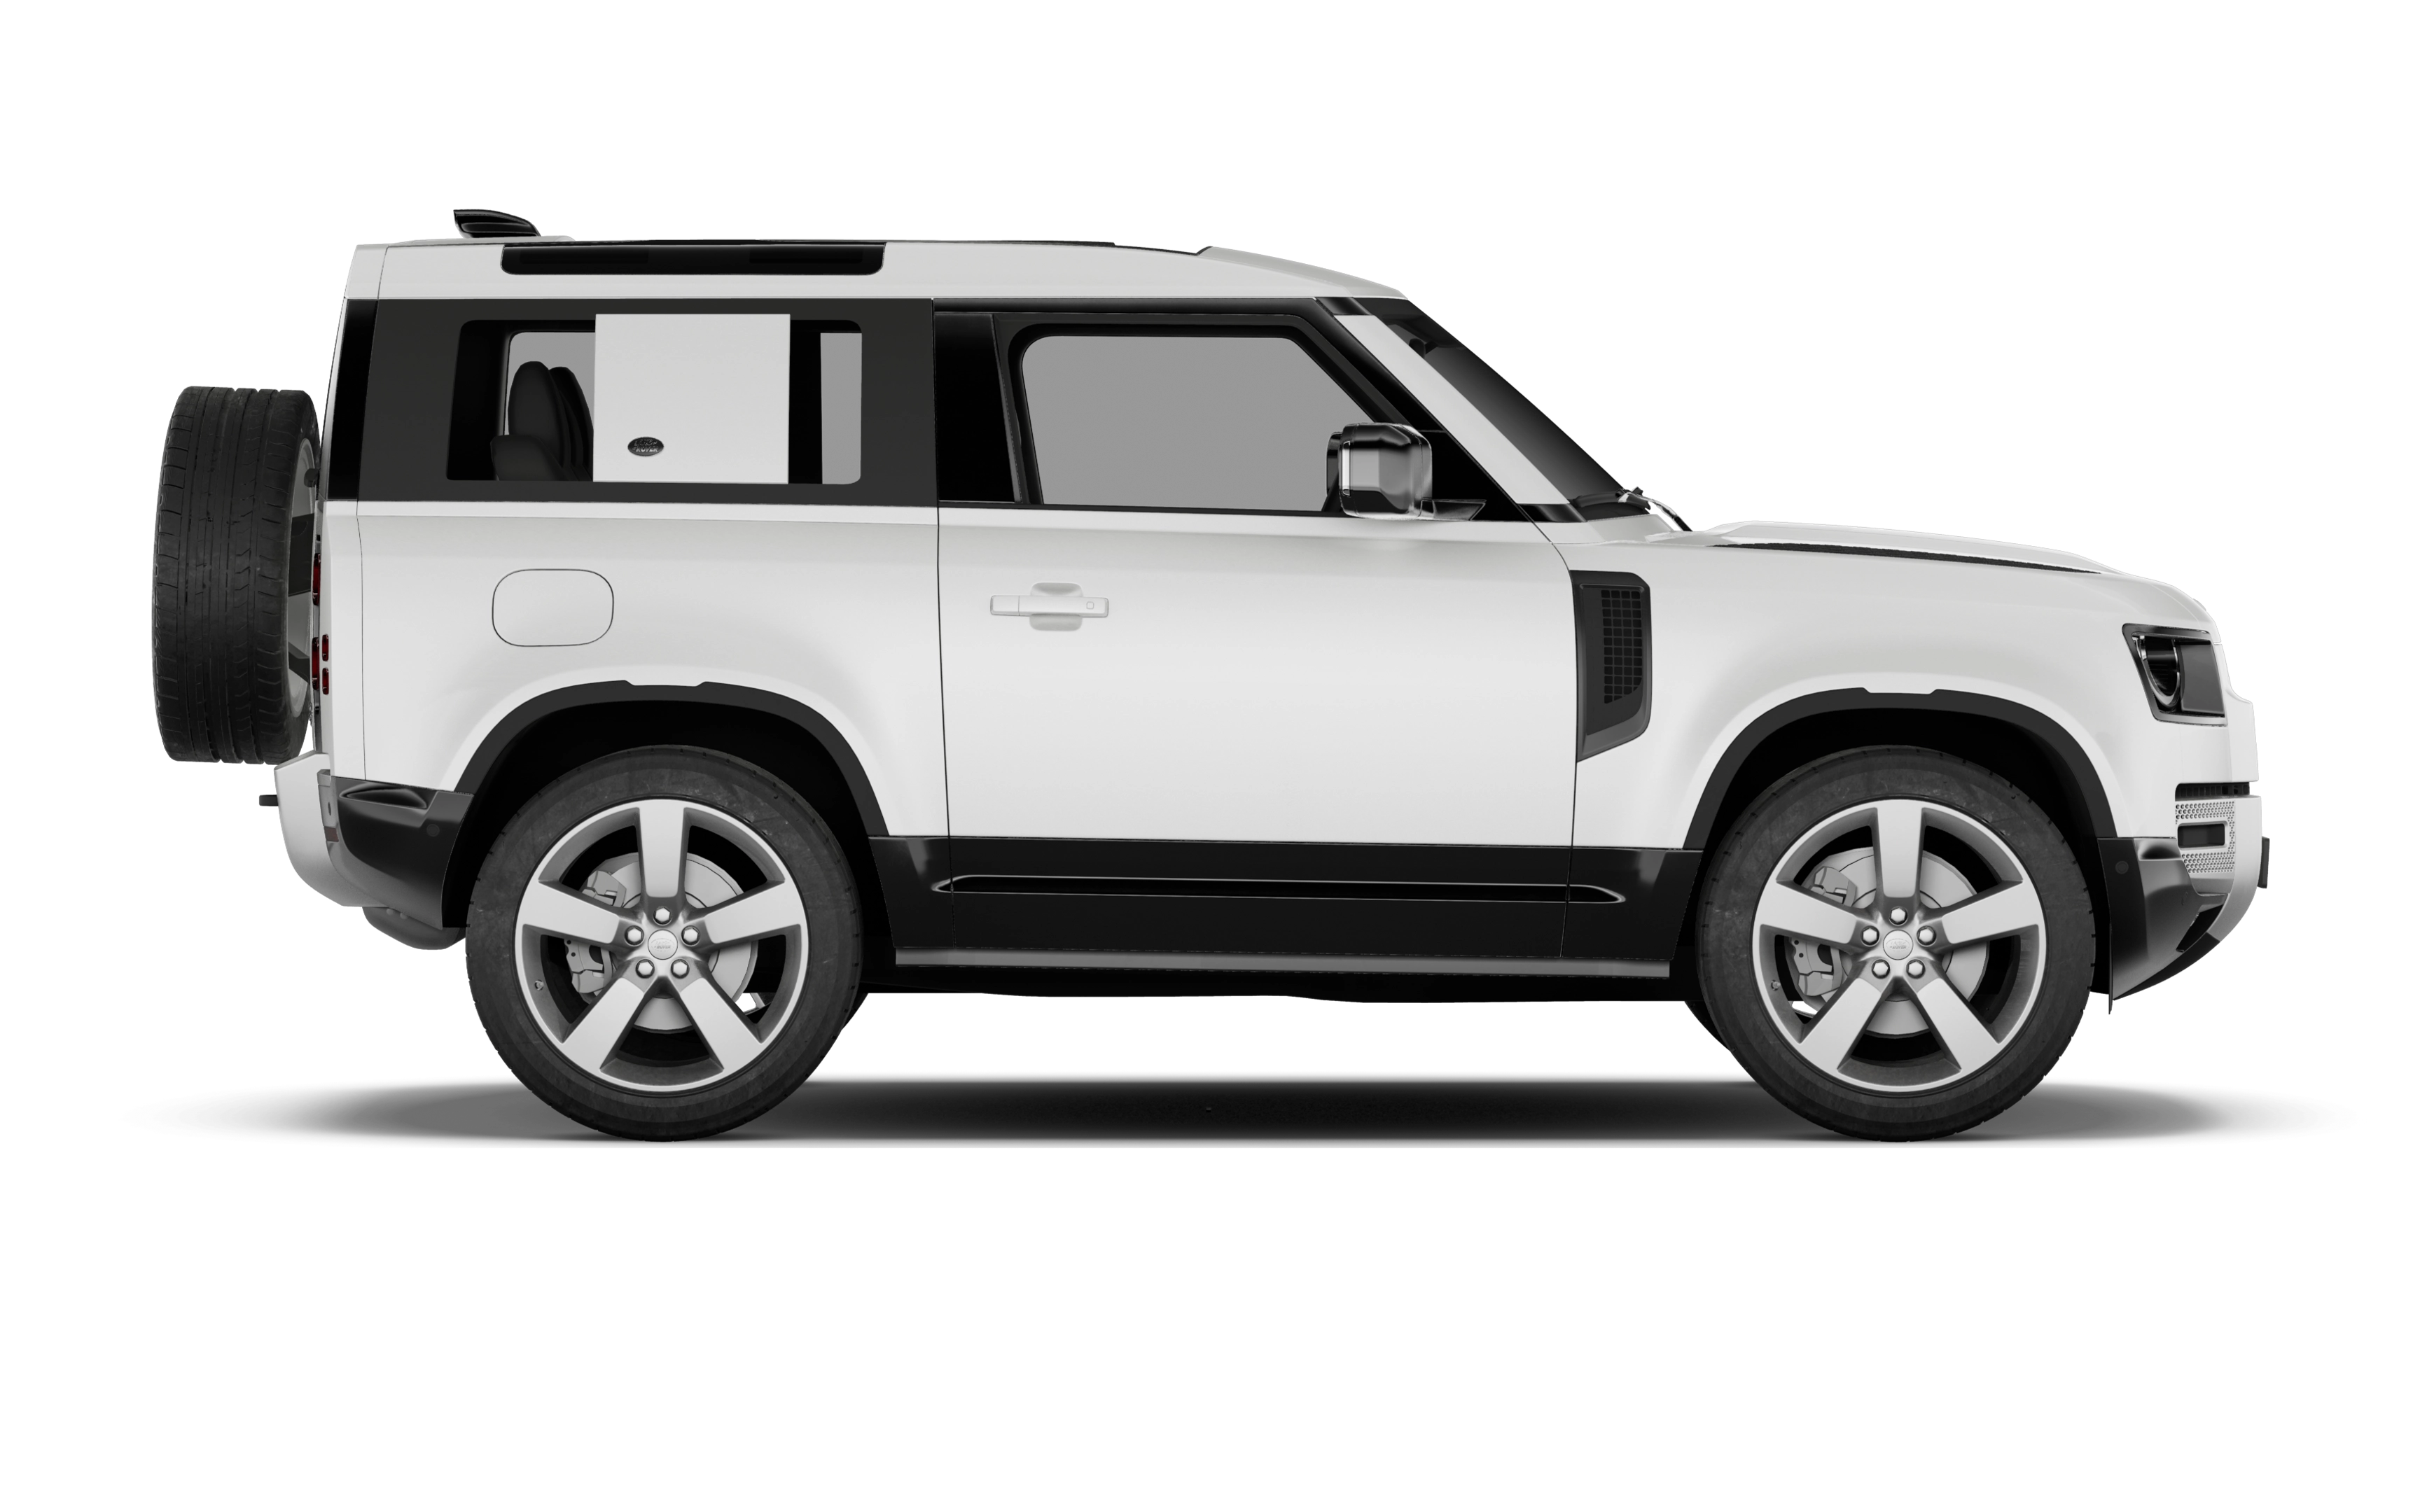 Land rover defender estate 3.0 d300 hse 110 5 doors auto [7 seat]